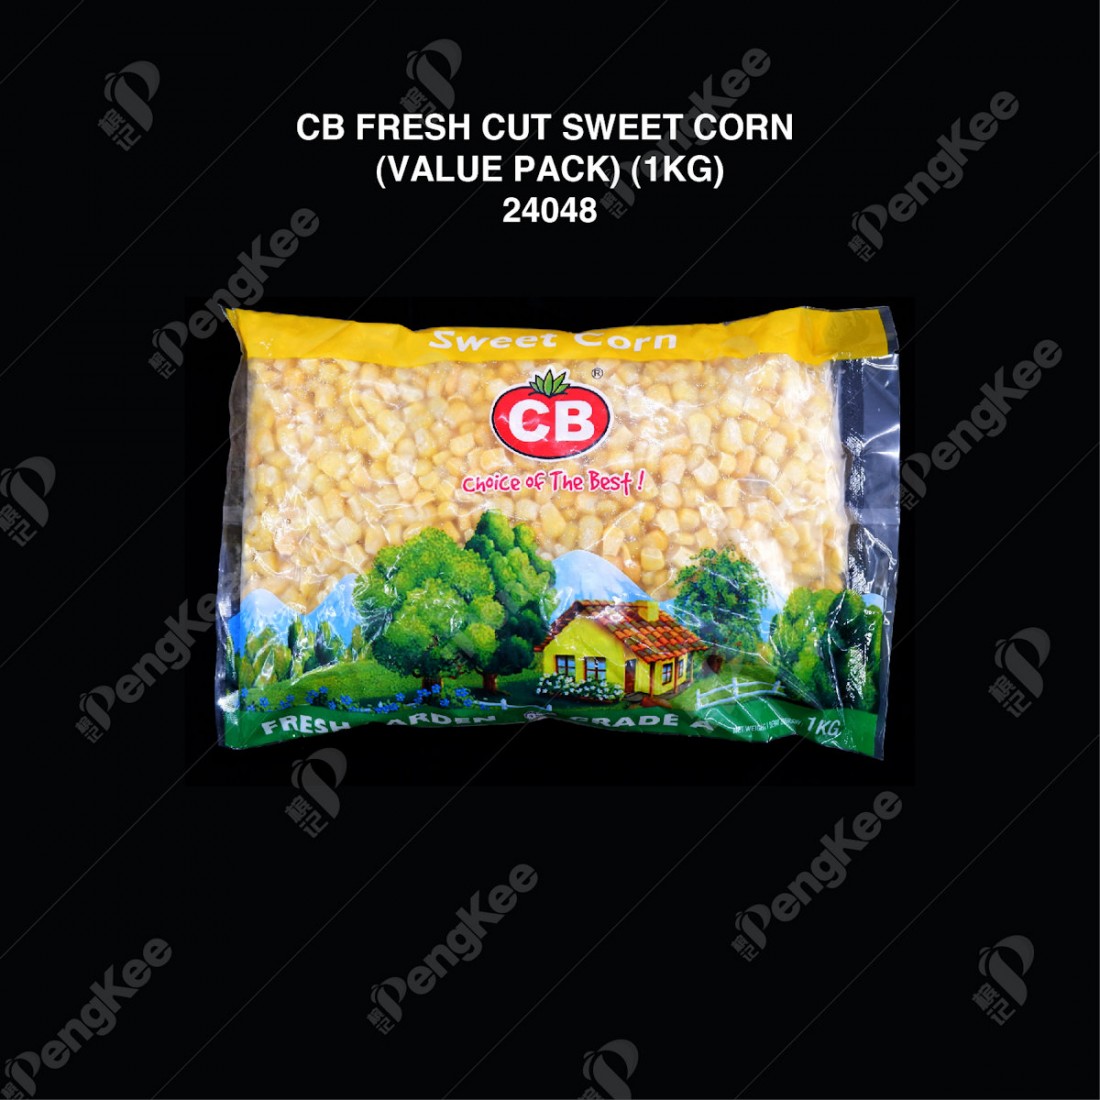 CB FRESH CUT SWEET CORN (VALUE PACK) (1KG)